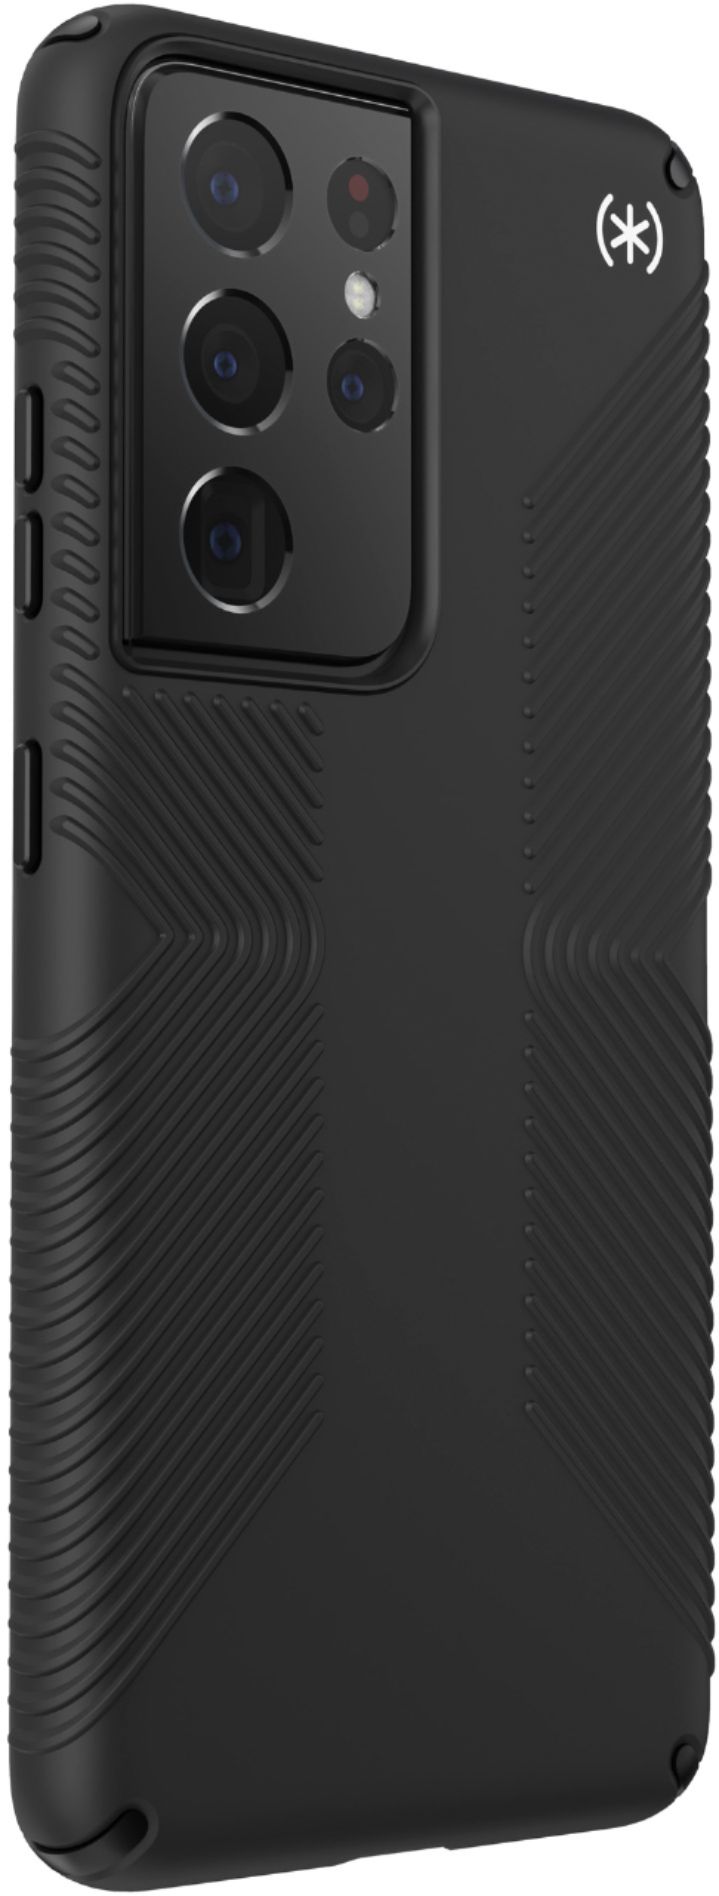 Angle View: Speck - Presidio2 Grip Case for Samsung Galaxy S21 Ultra 5G - Black